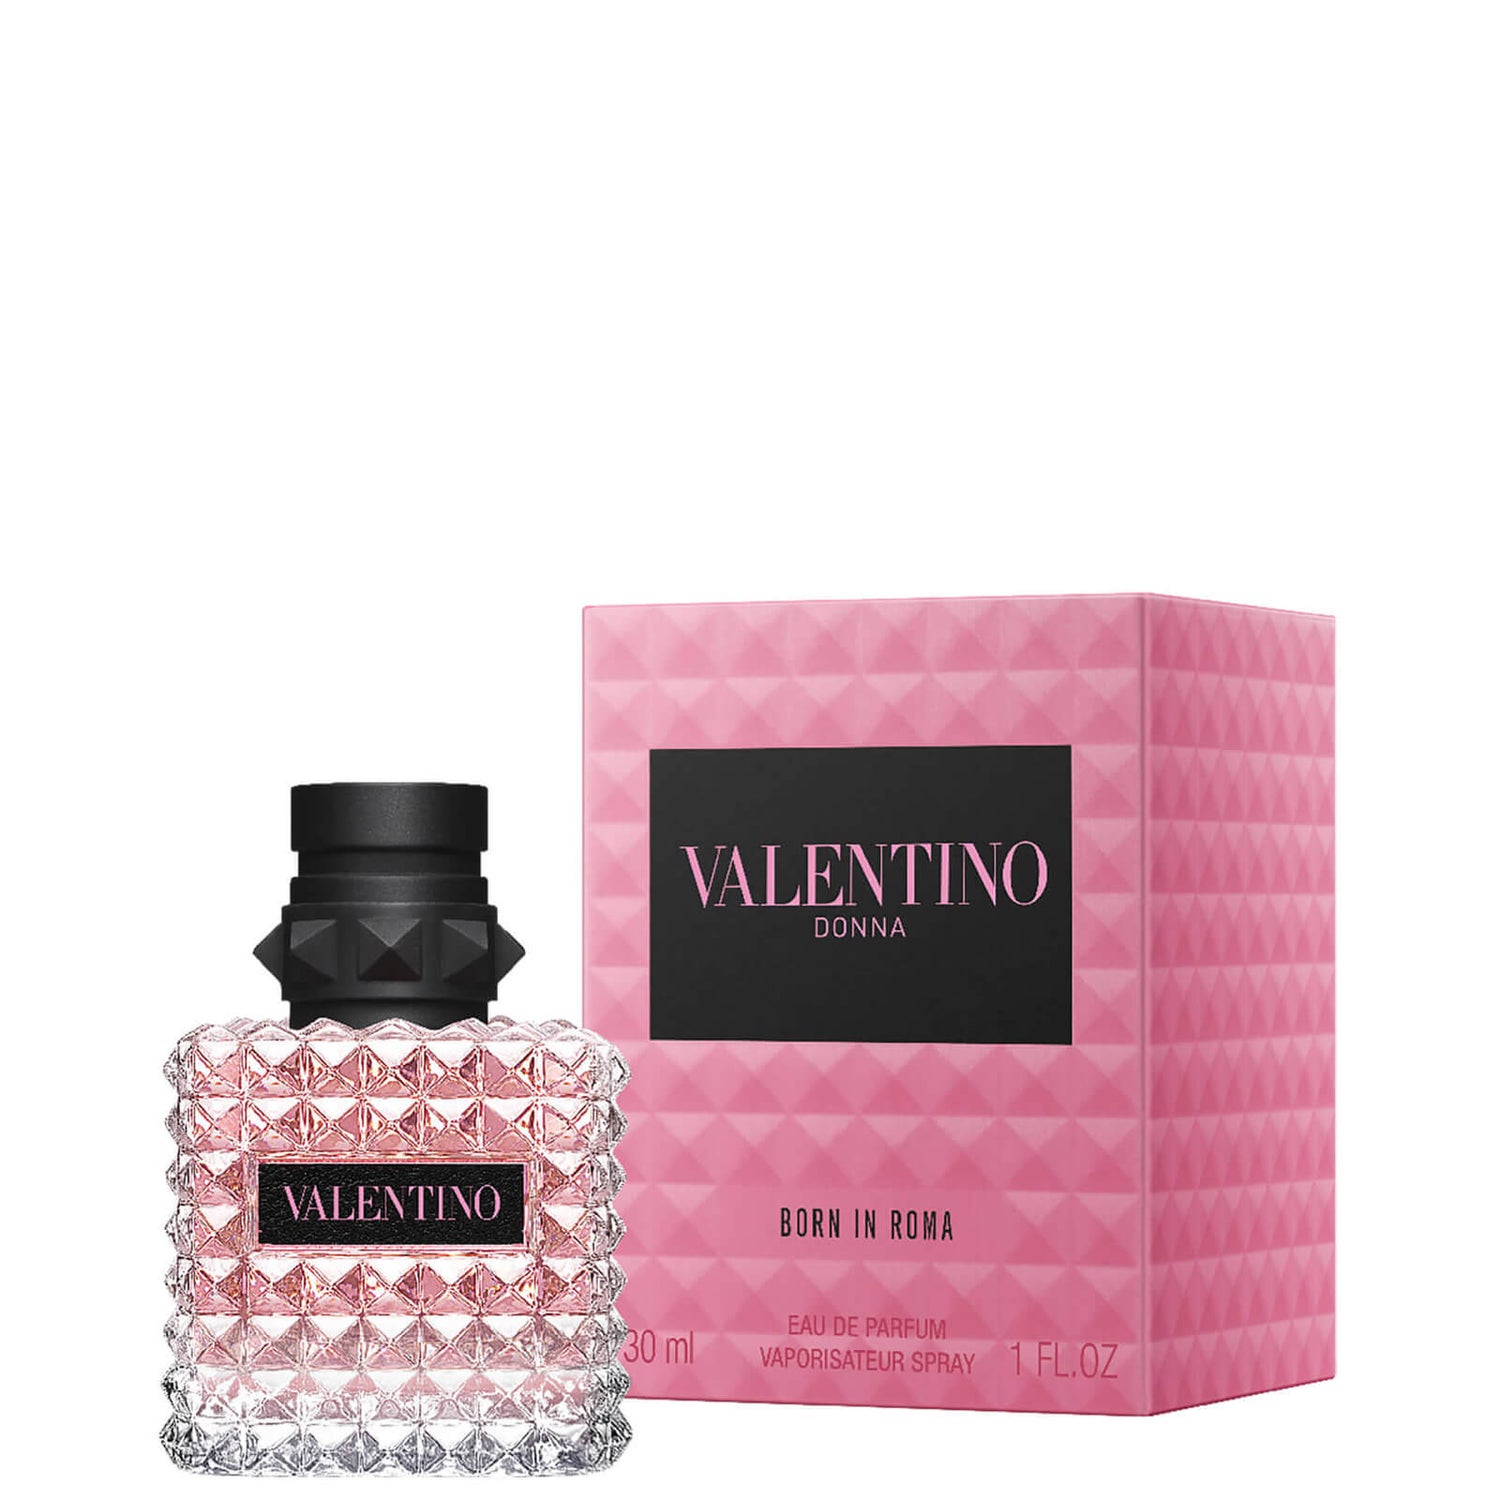 Valentino Born in Roma Donna Eau de Parfum - 30ml | LOOKFANTASTIC